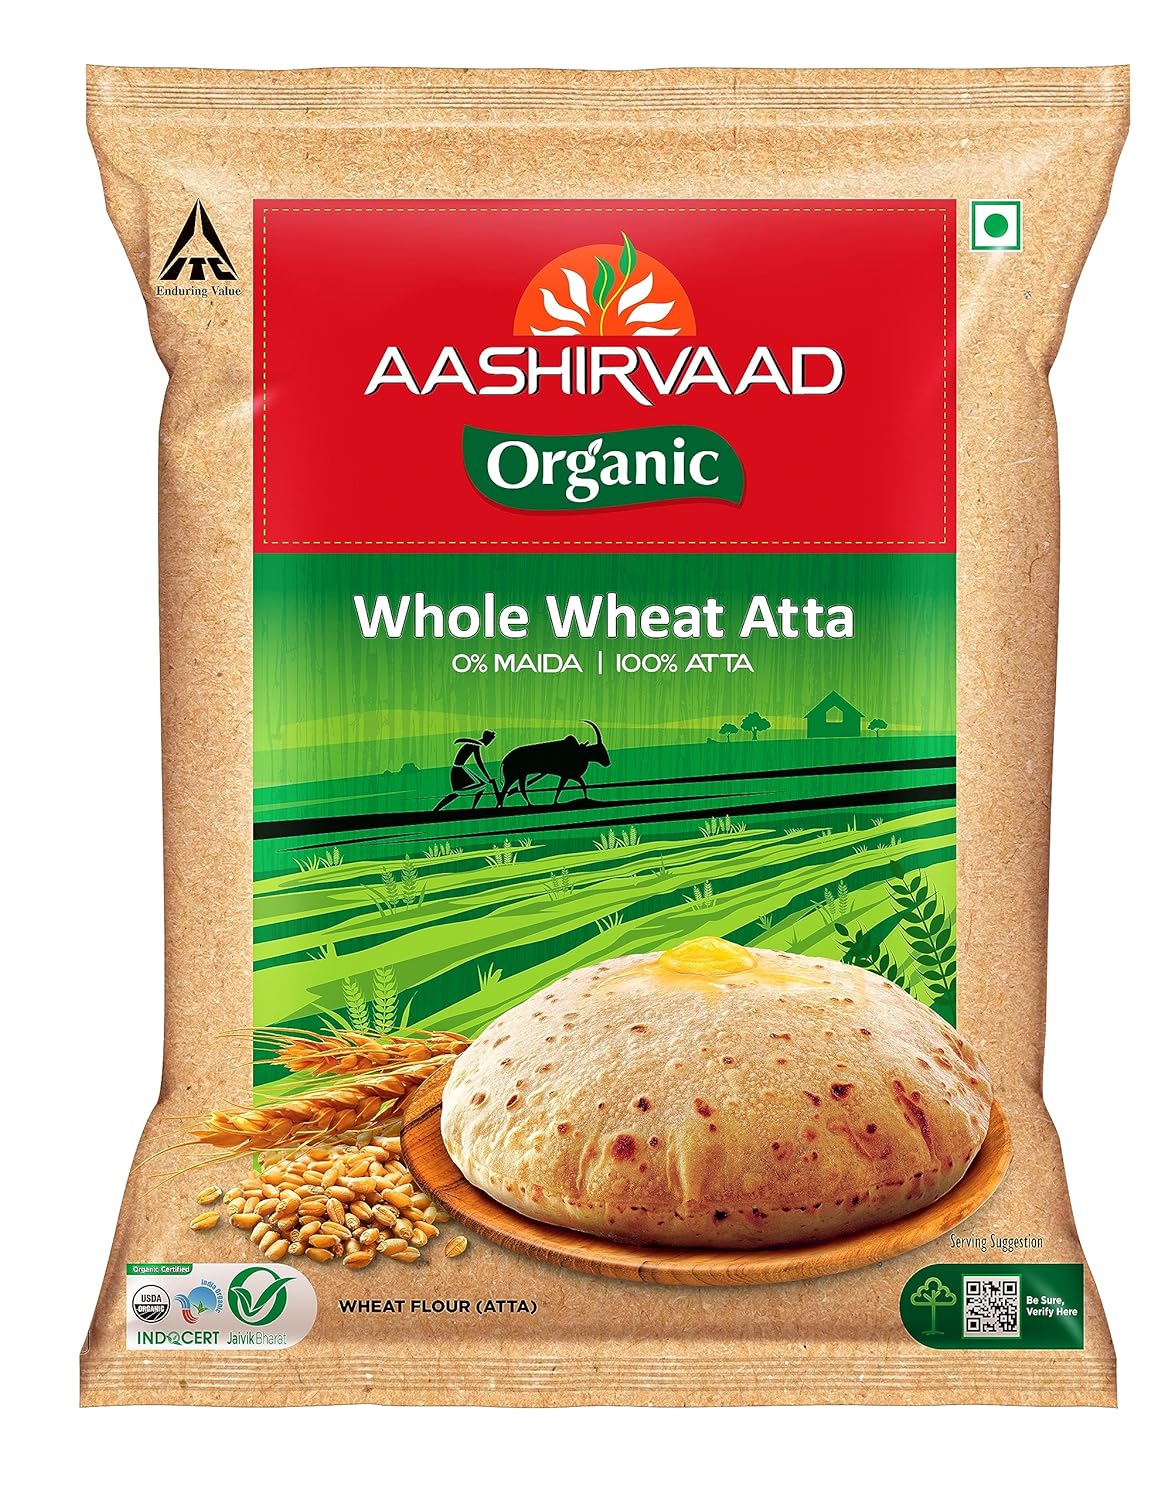 Aashirvaad Nature's Super Foods Organic Atta - buy in USA, Australia, Canada